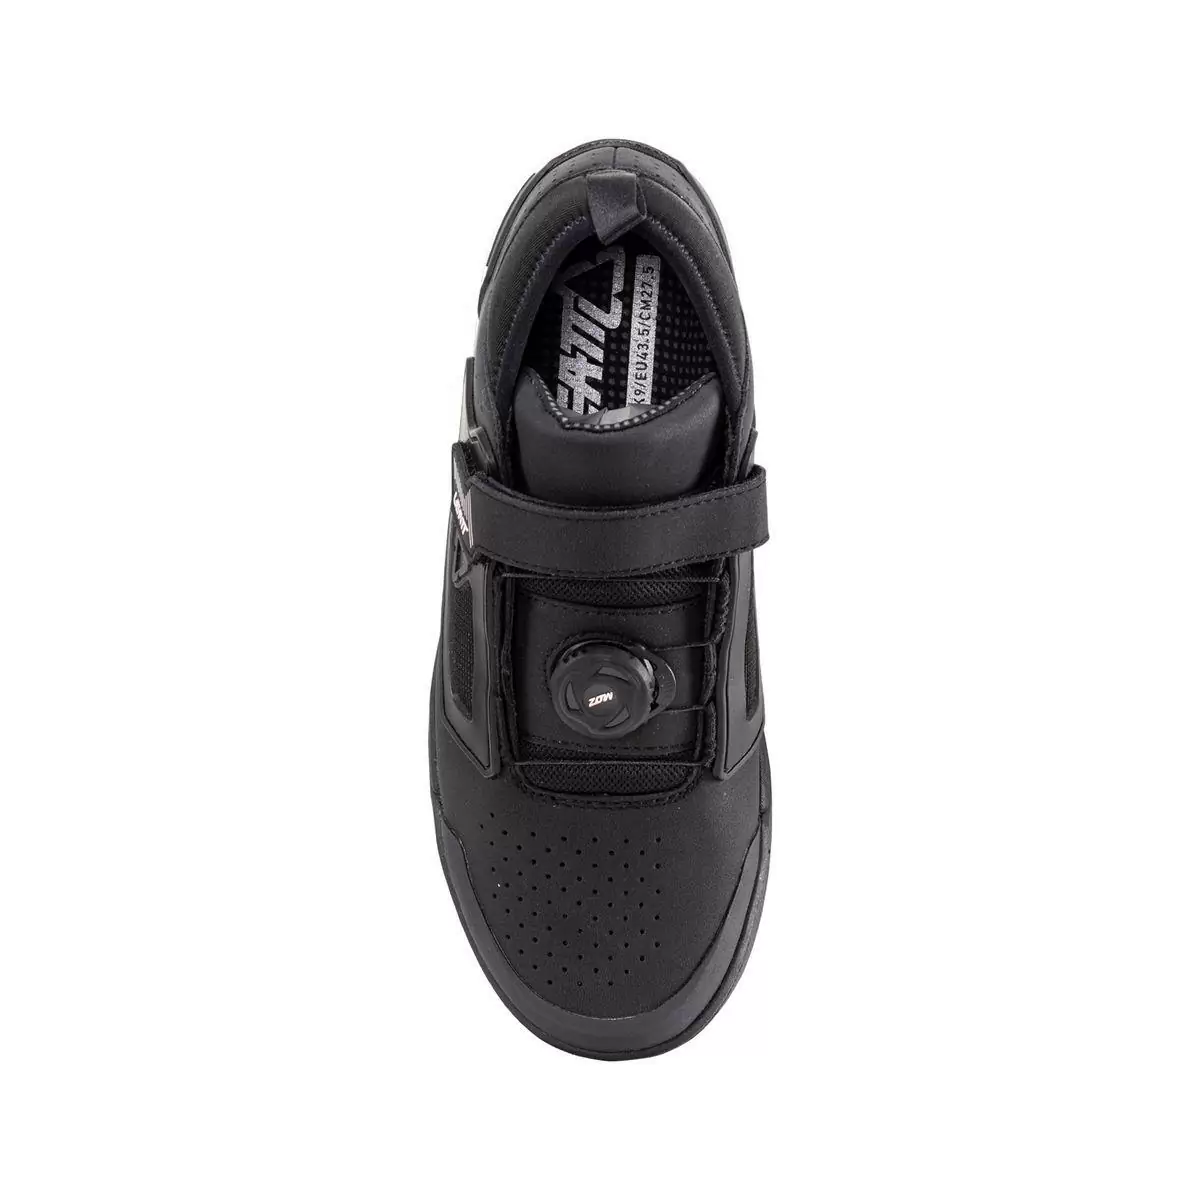 Pro Flat 3.0 MTB Shoes Black Size 38.5 #3